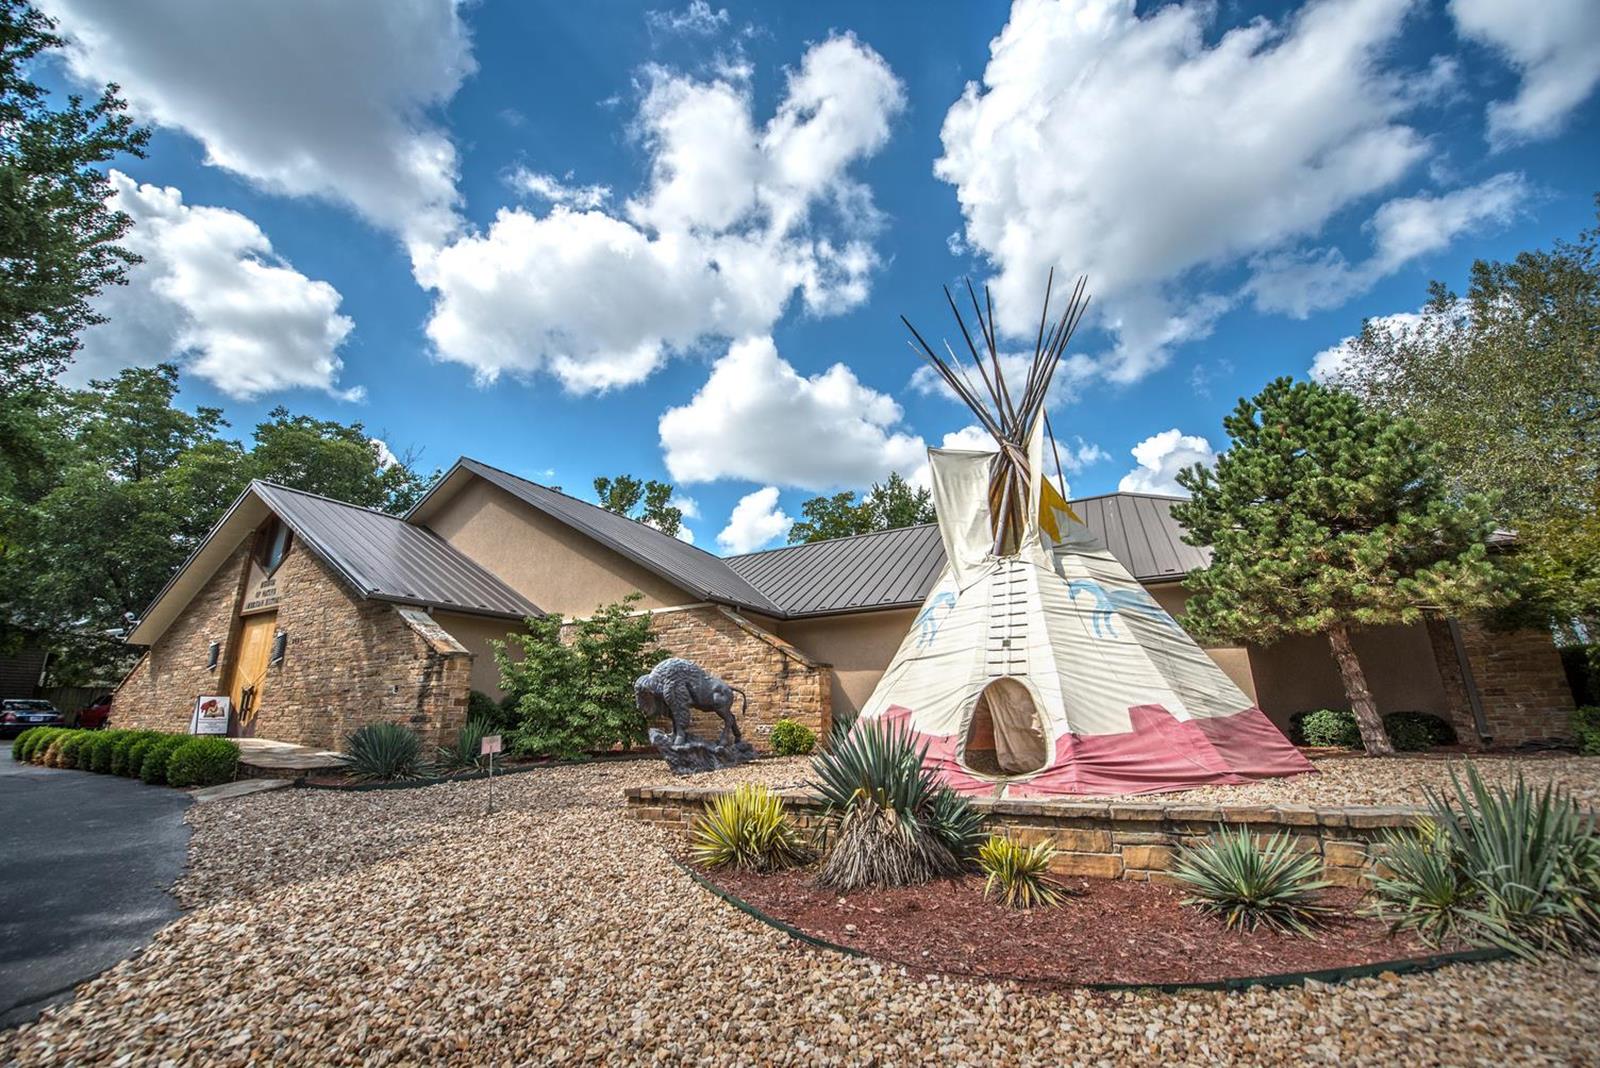 Bentonville Museum of Native American History celebrates Arkansas history